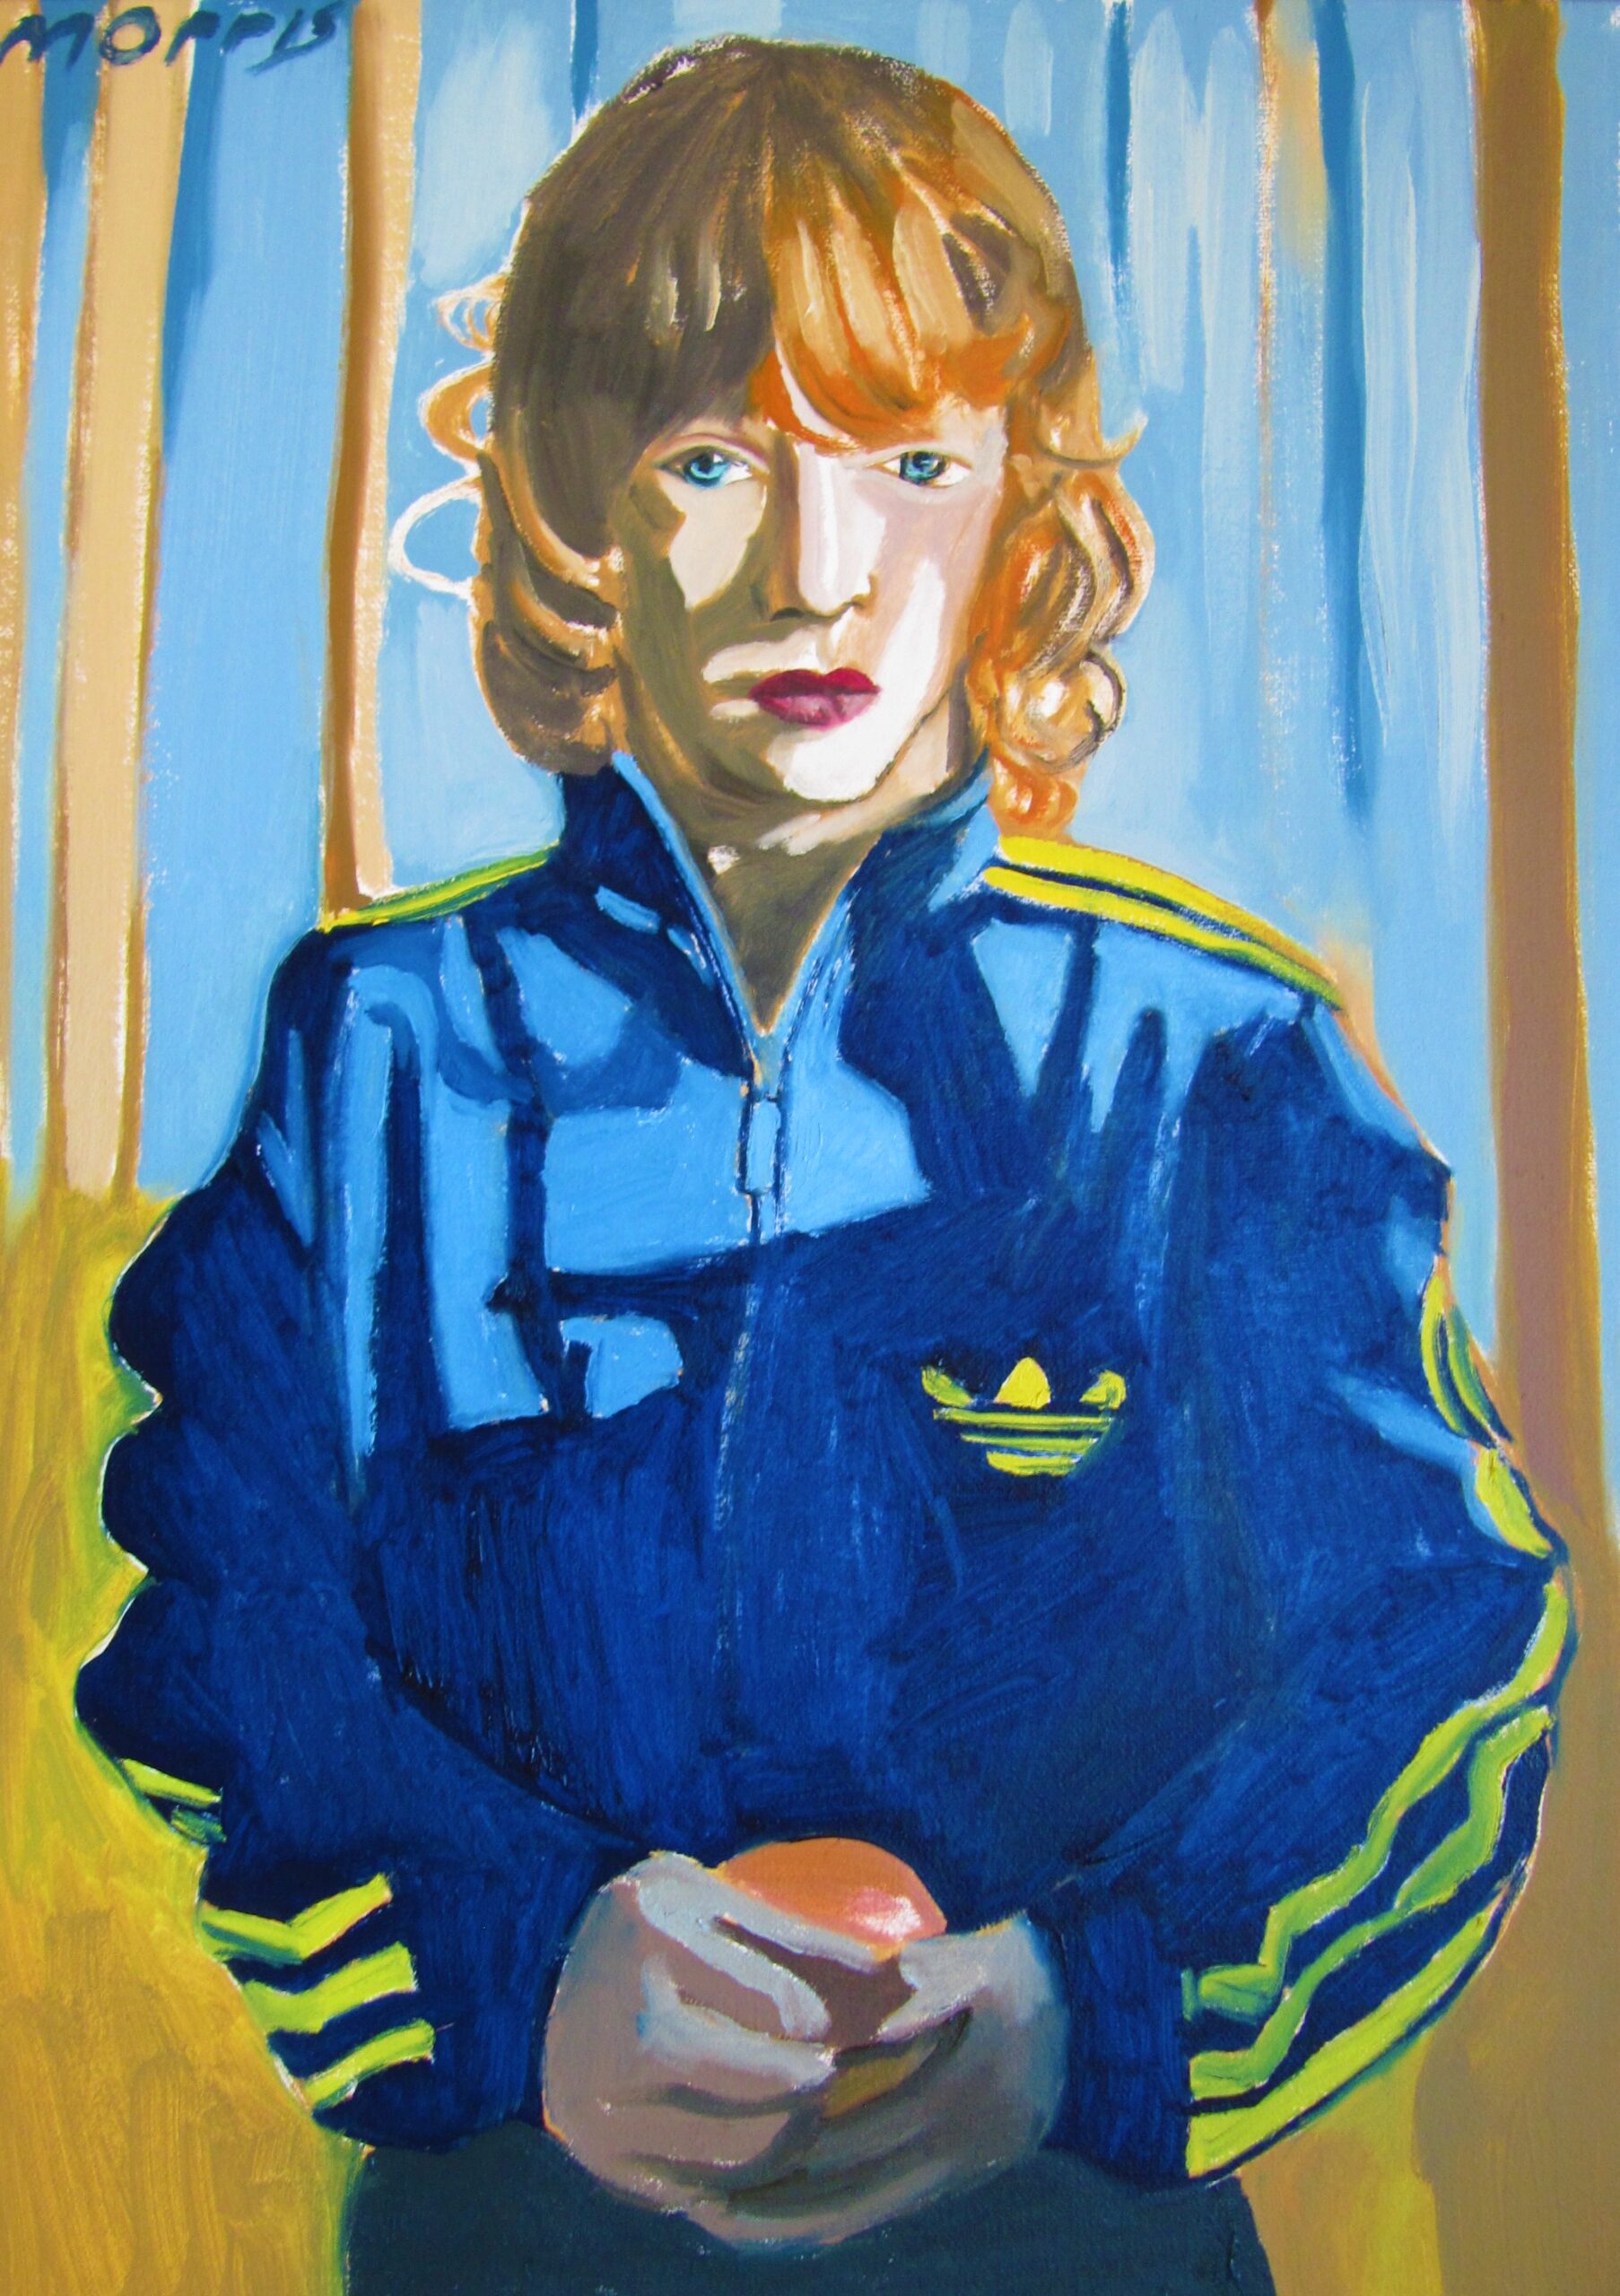 'Boy With Orange', Graeme Morris, Oil on canvas, 60 x 42 cm